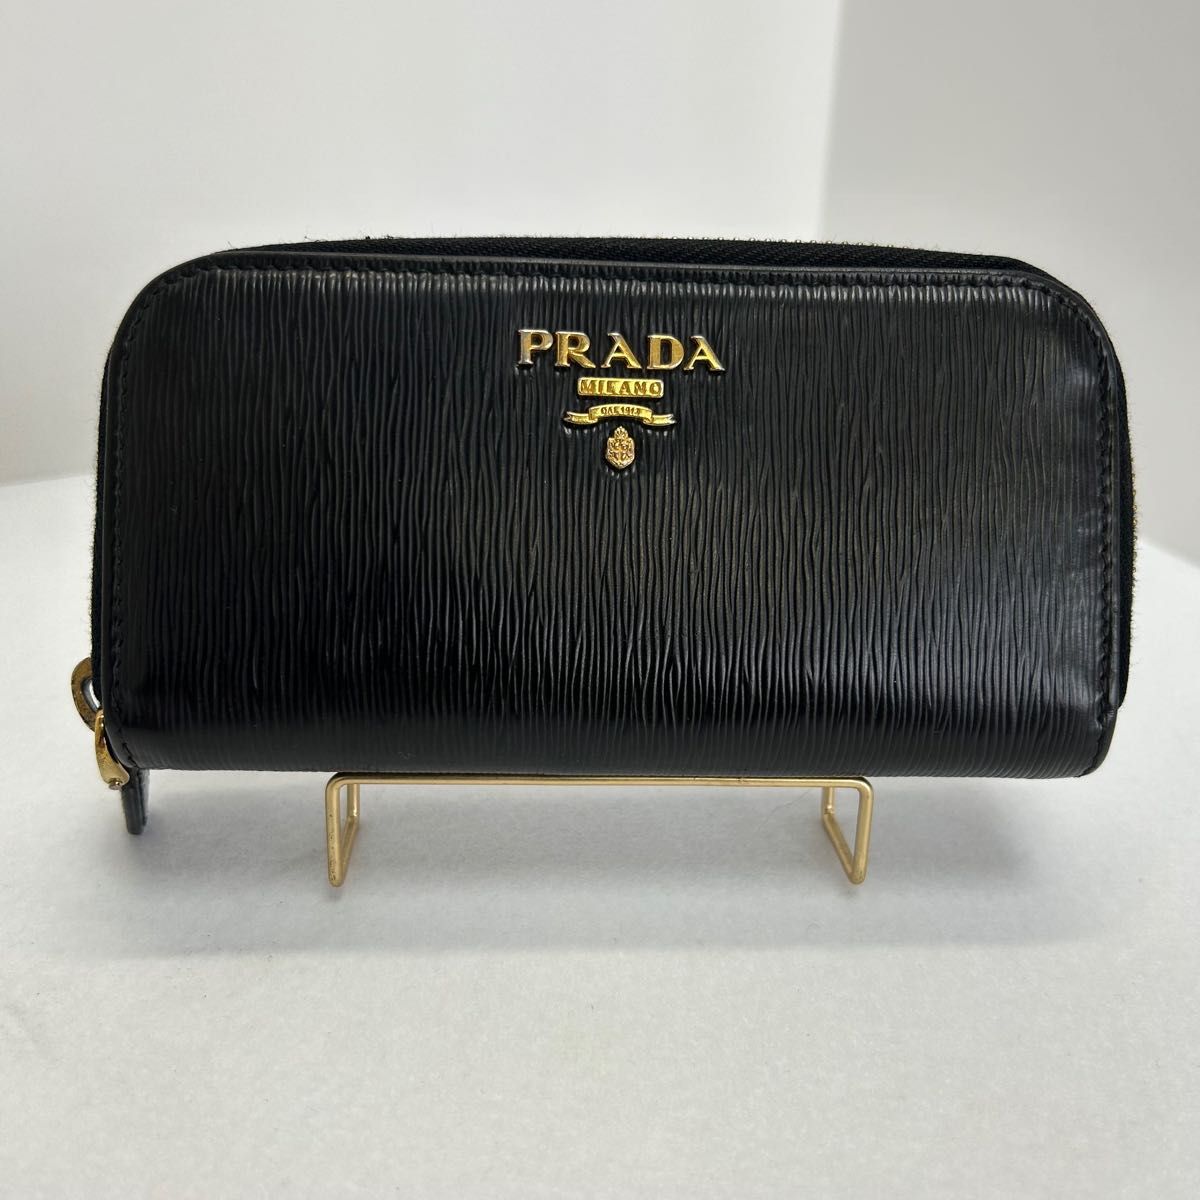 PRADA プラダ キーケース 財布 バッグ レディースファッション 財布